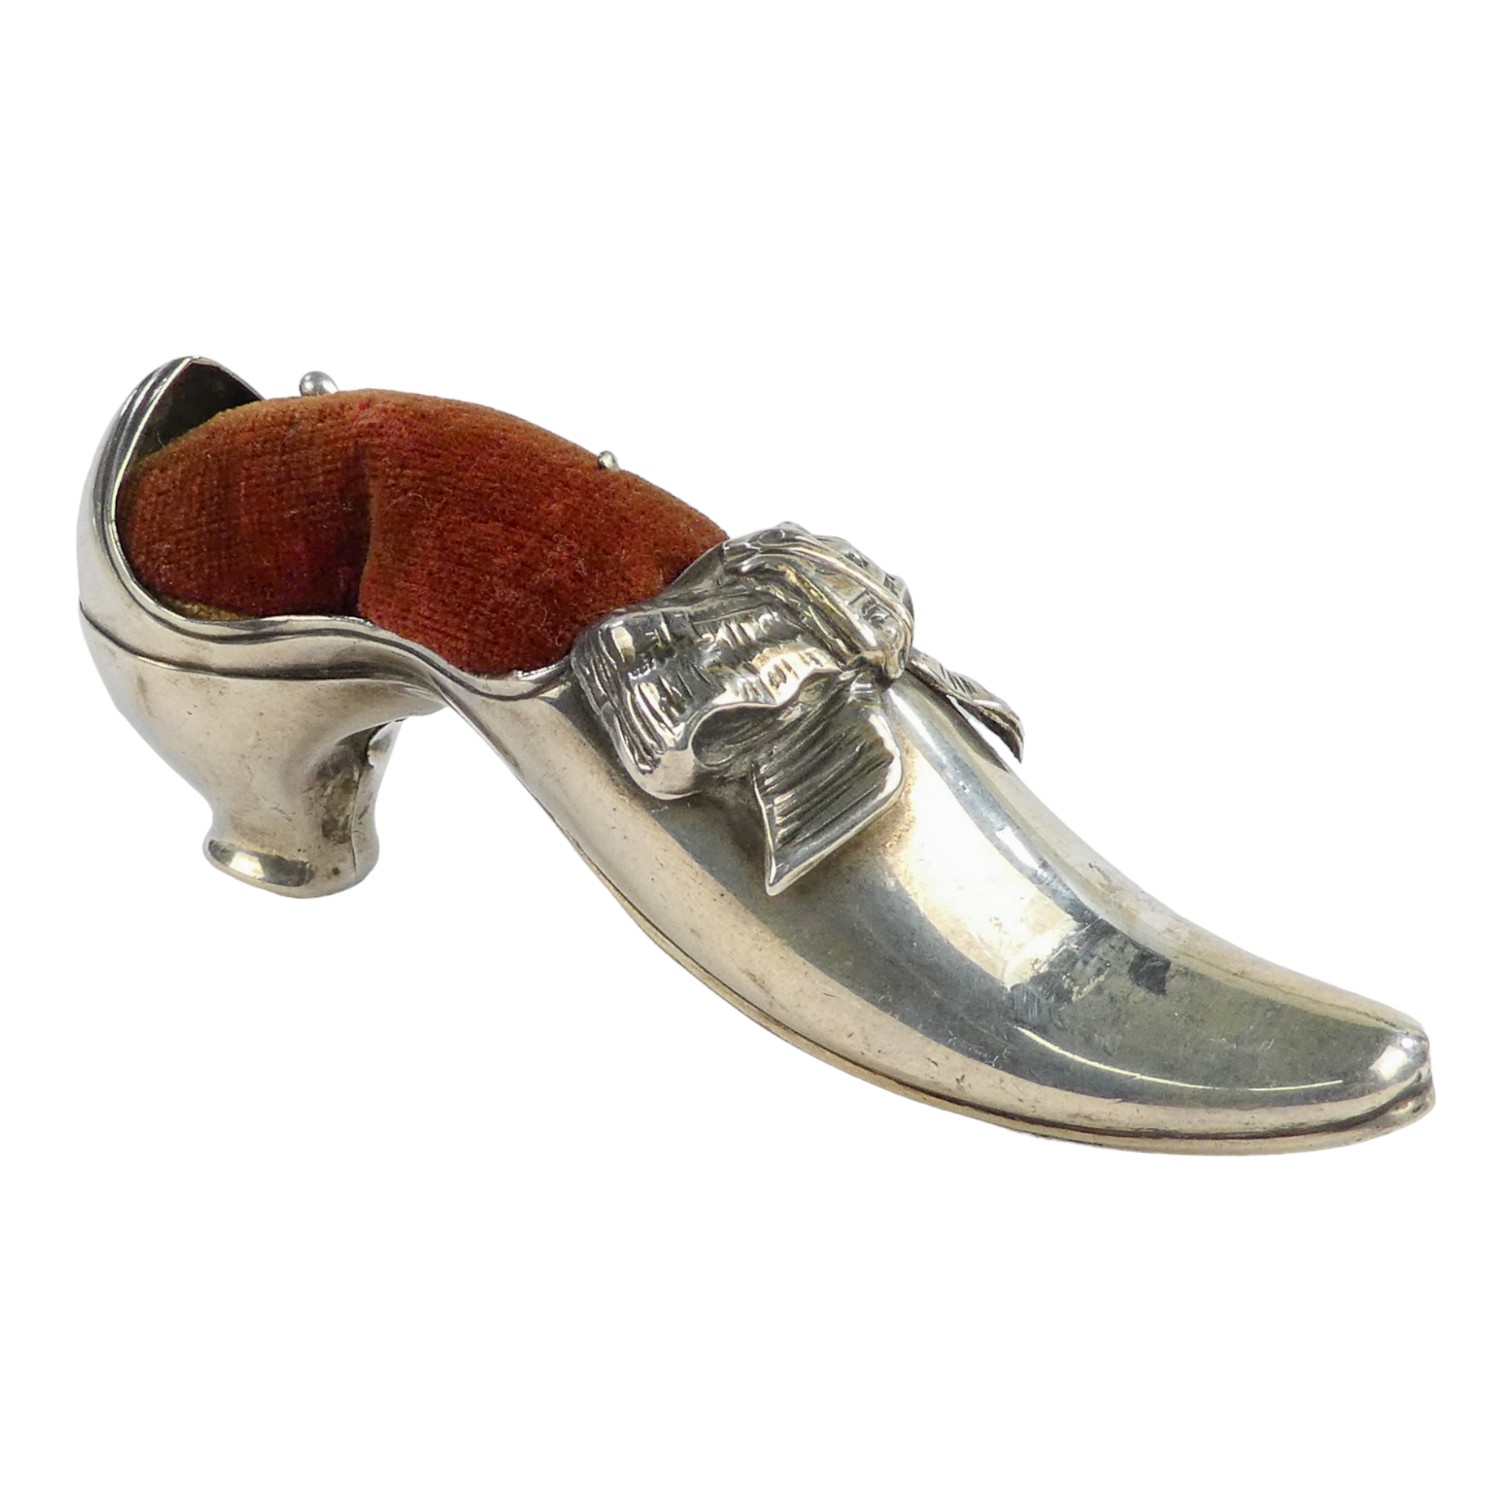 A silver pin cushion modelled as a ladies shoe - Birmingham 1904, Adie & Lovekin Ltd, length 8.5cm. - Image 2 of 4